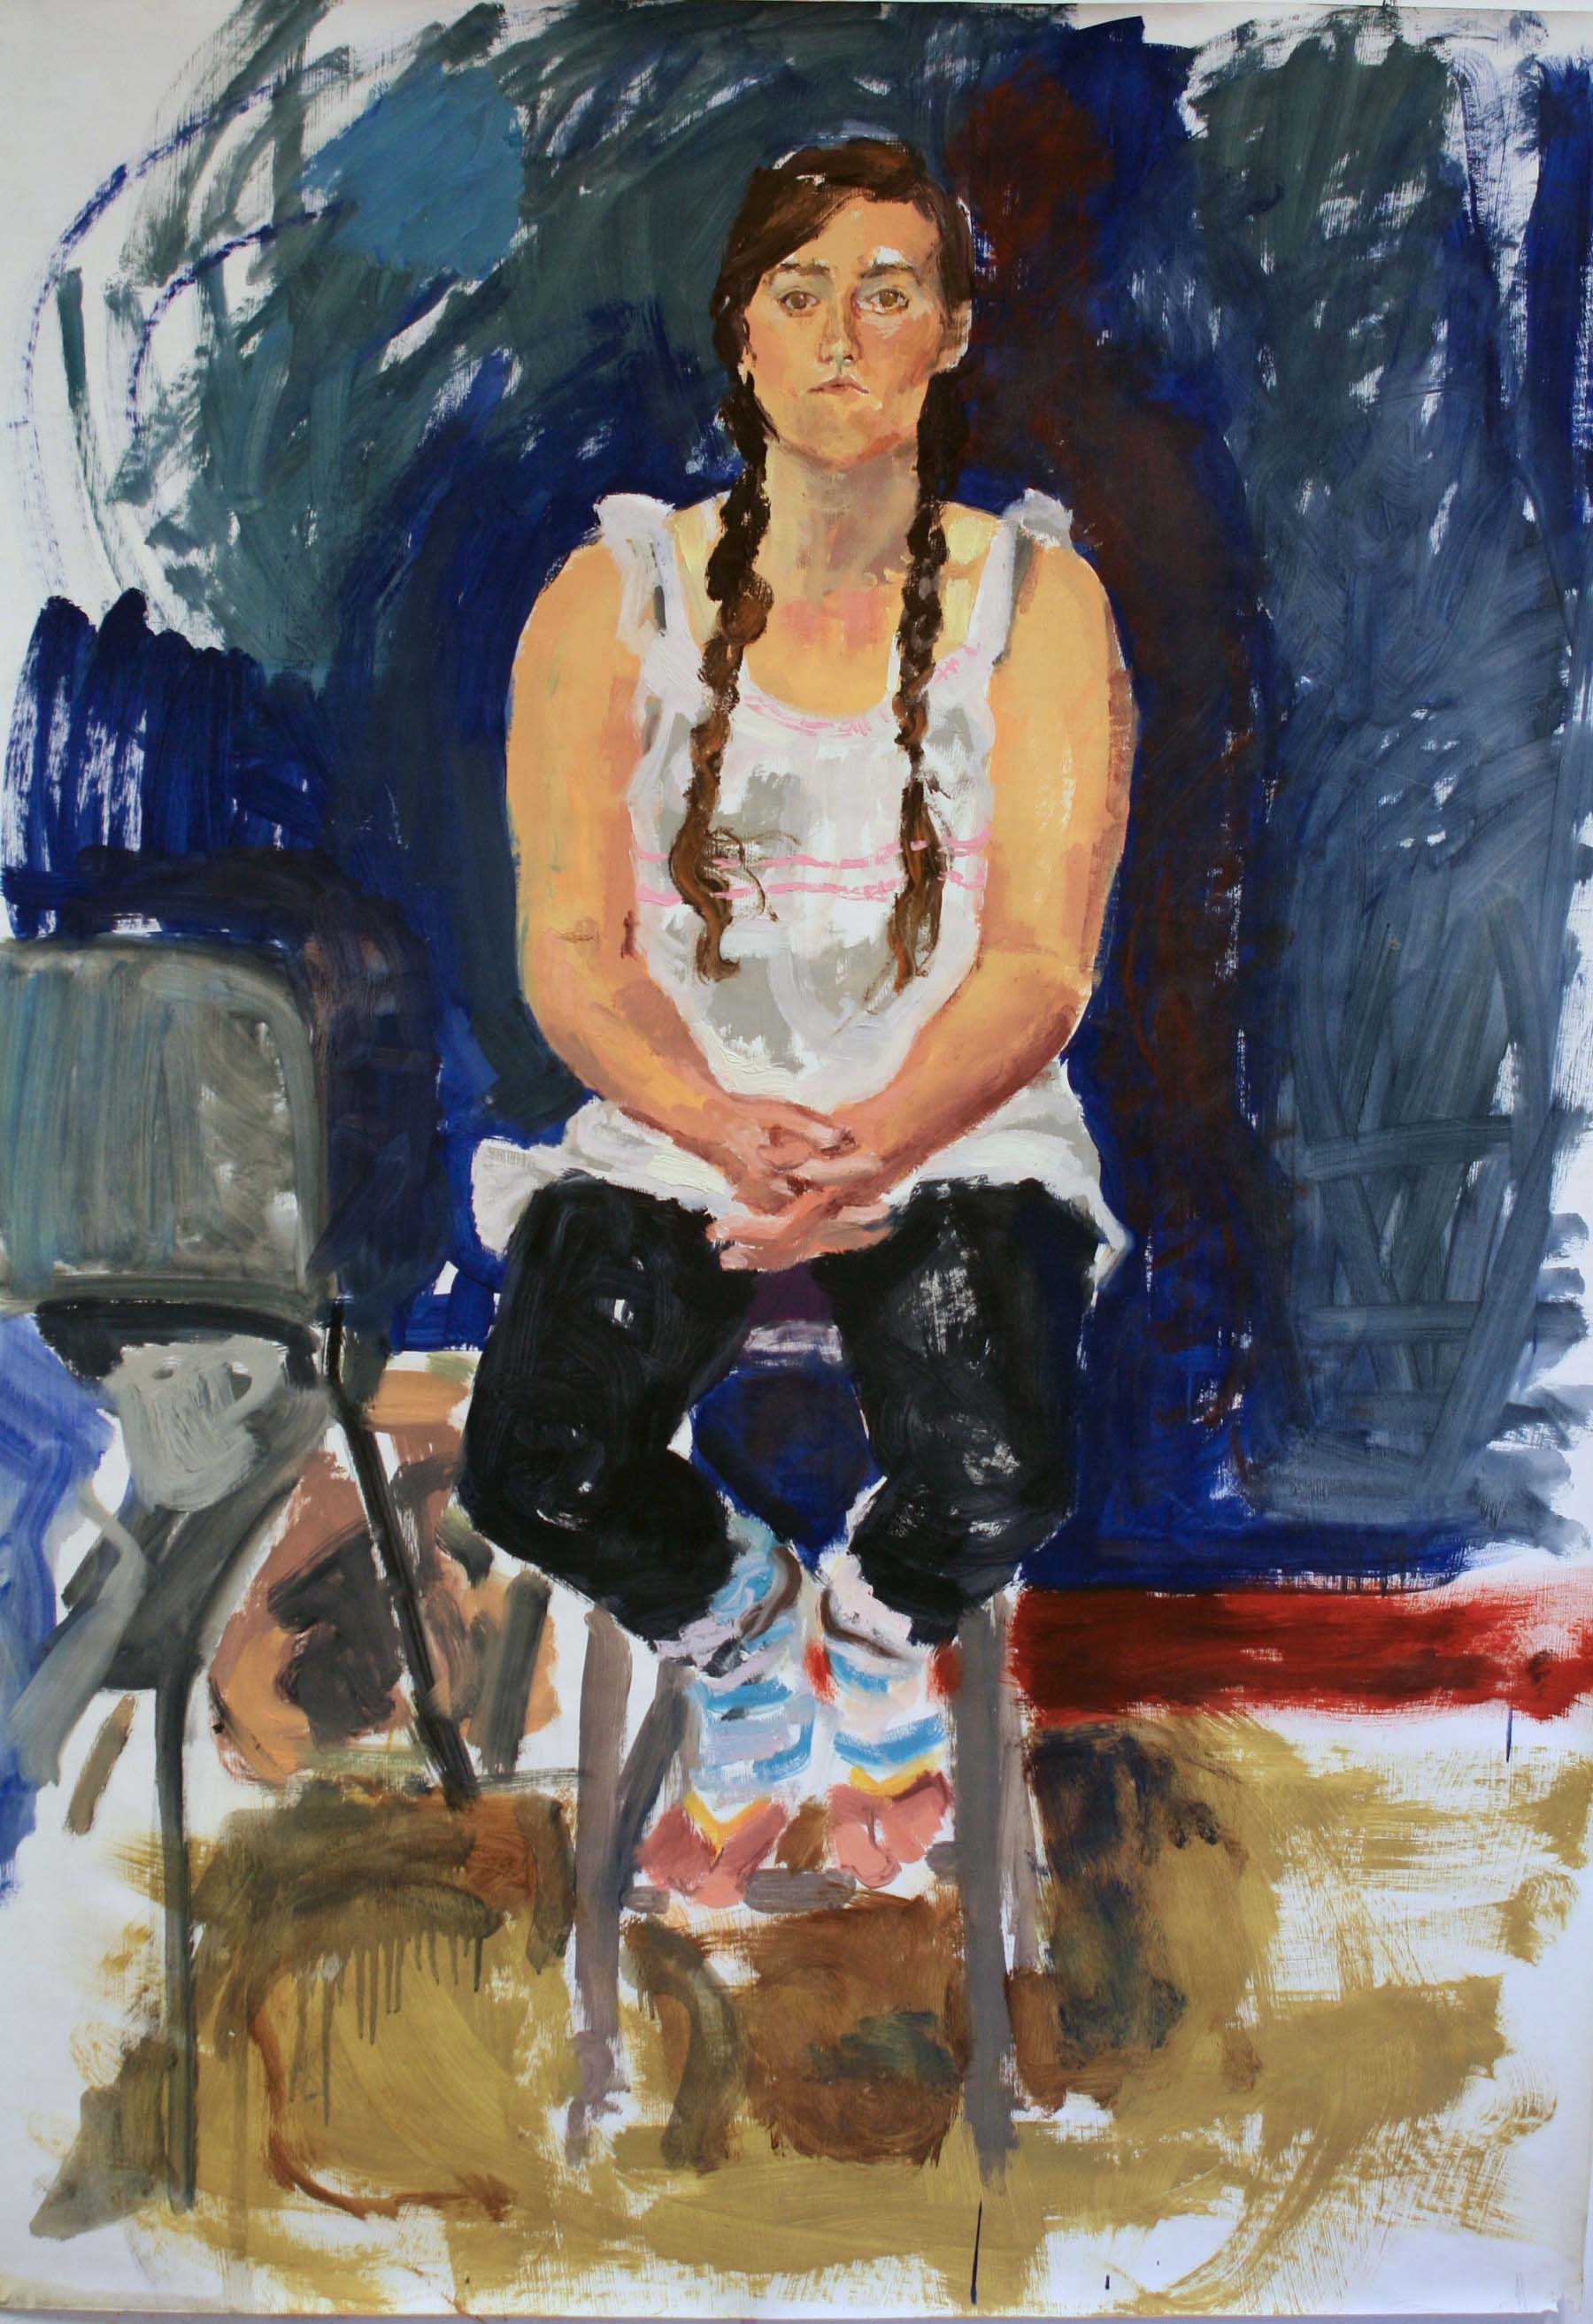   Amy , 2008. Oil on prepared paper, 50 x 36" 